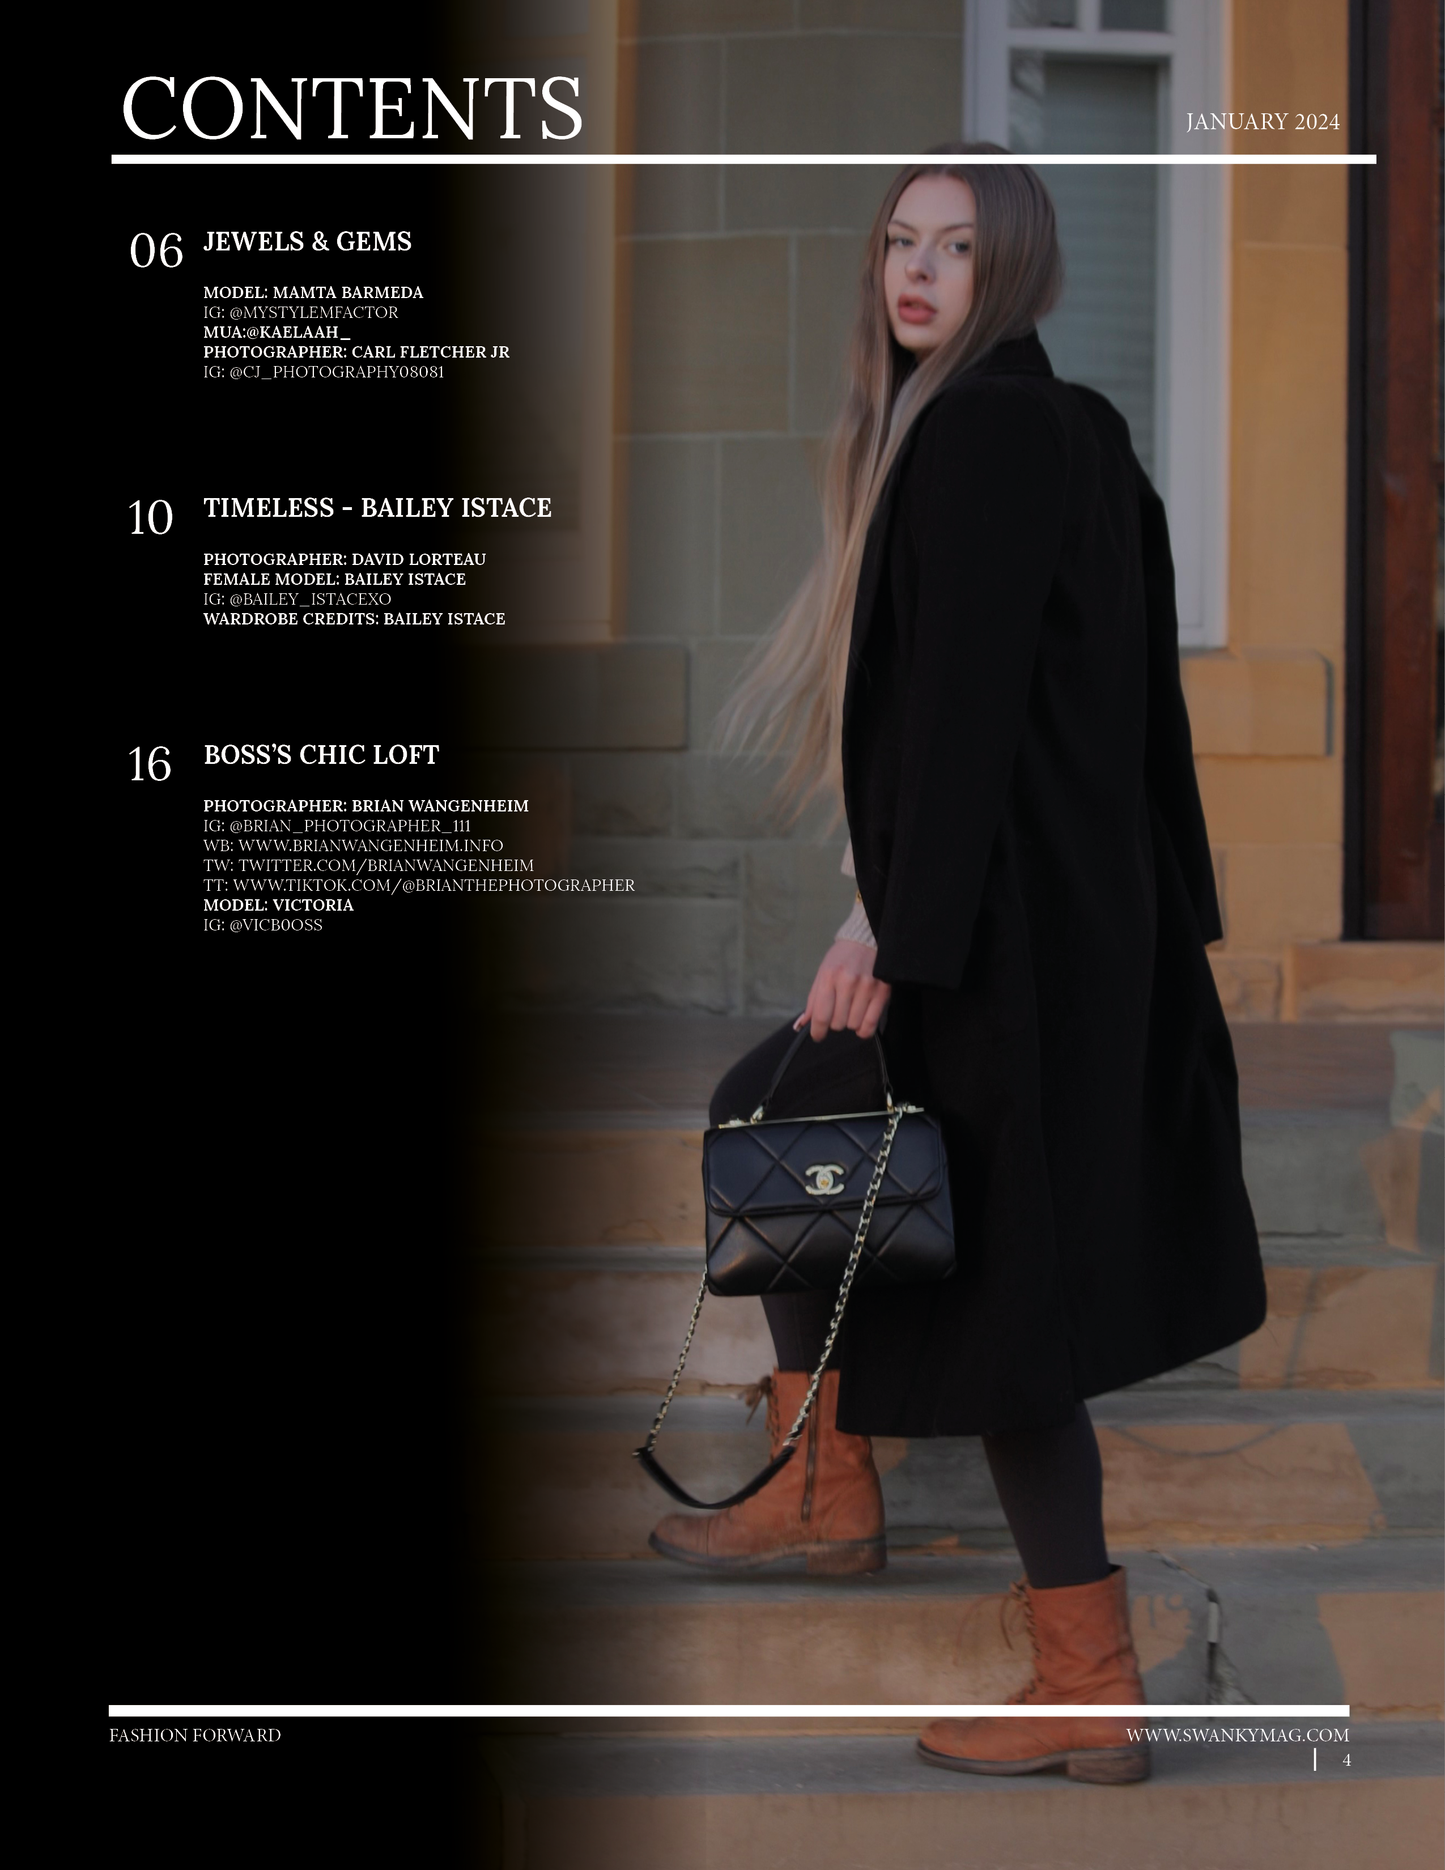 Swanky Fashion Magazine - January 2024: The Fashion Edition Issue 1